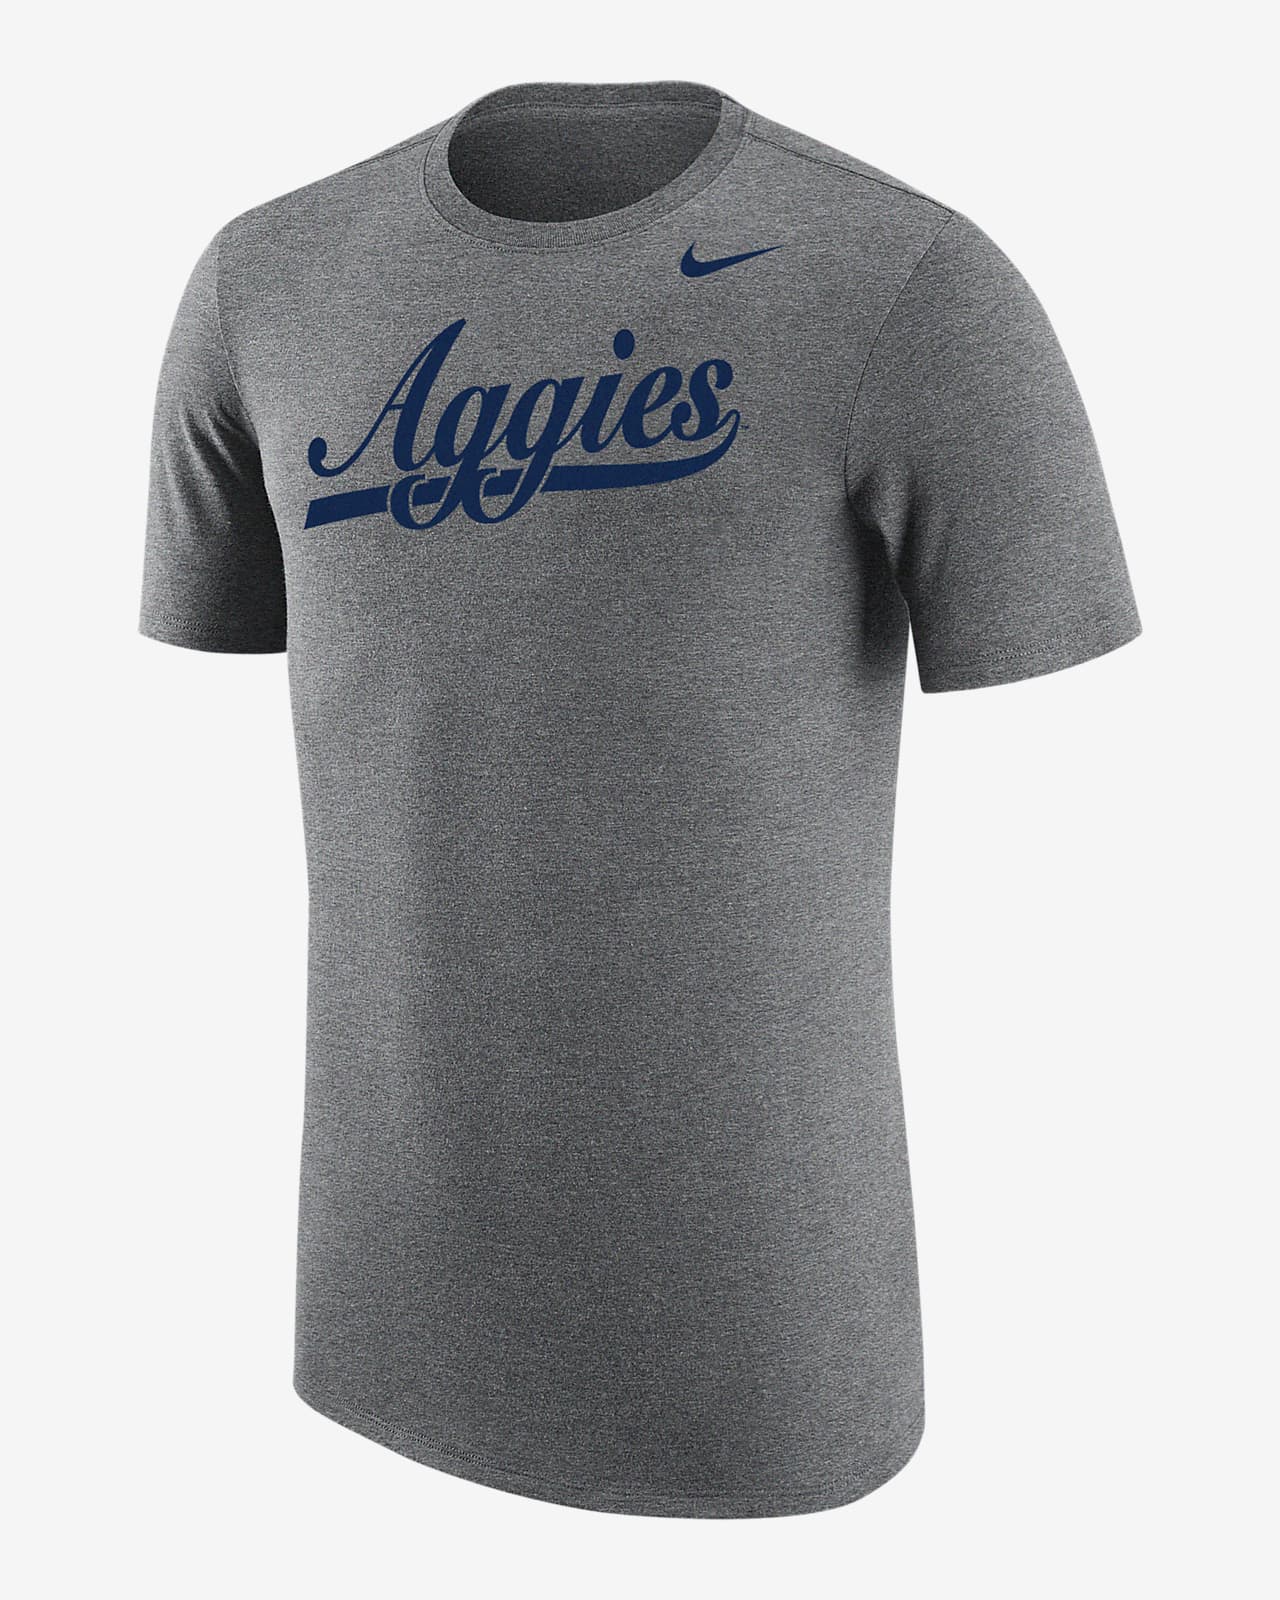 North Carolina A&T Men's Nike College T-Shirt